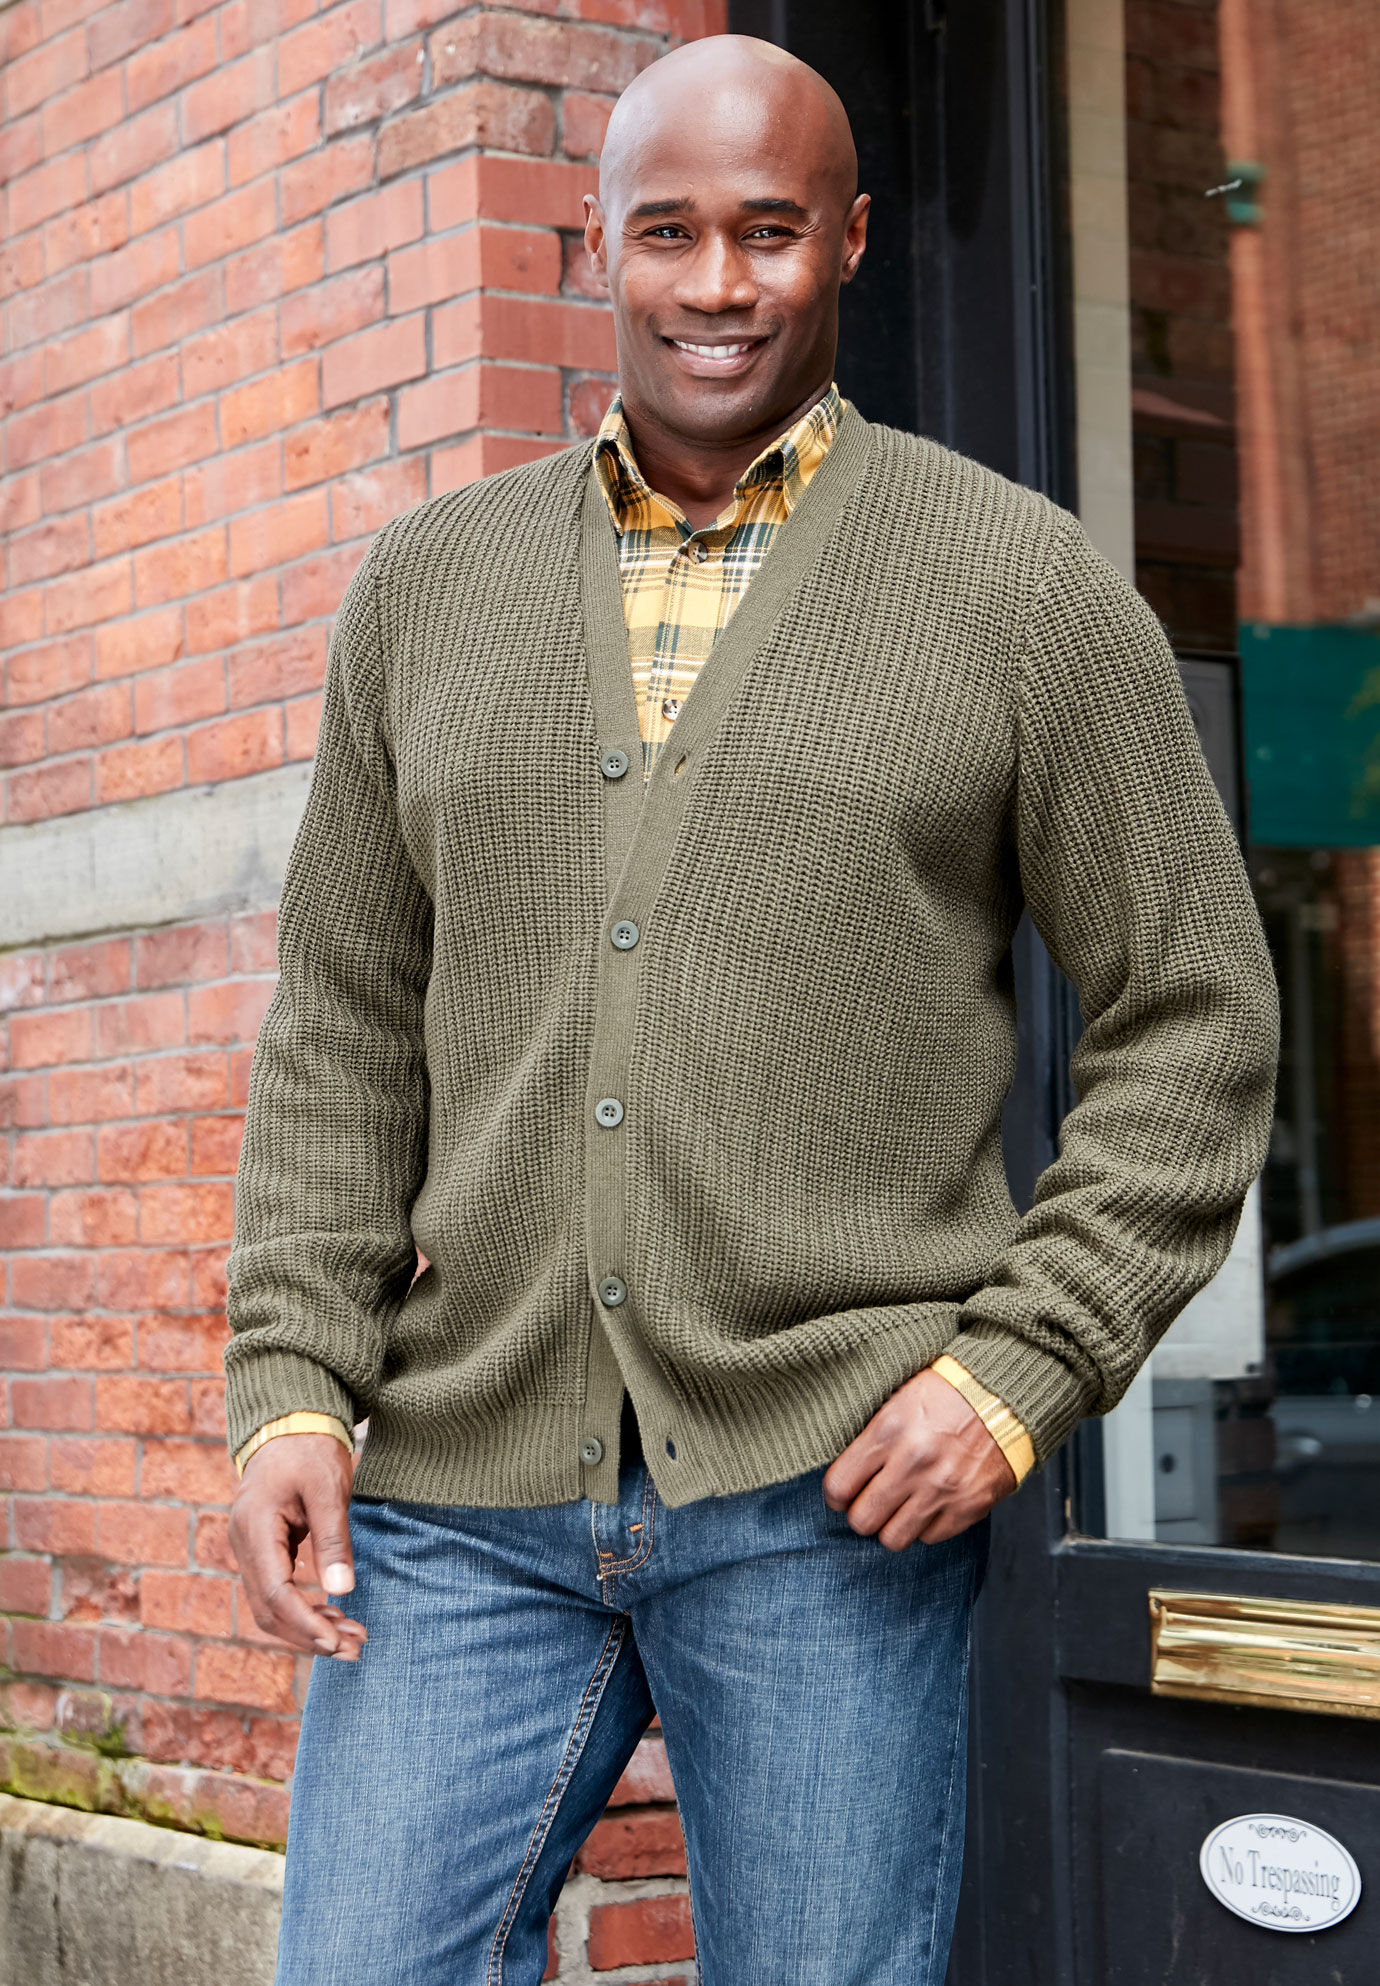 Kingsize Men's Big & Tall Shaker Knit Crewneck Sweater - Big - 7xl